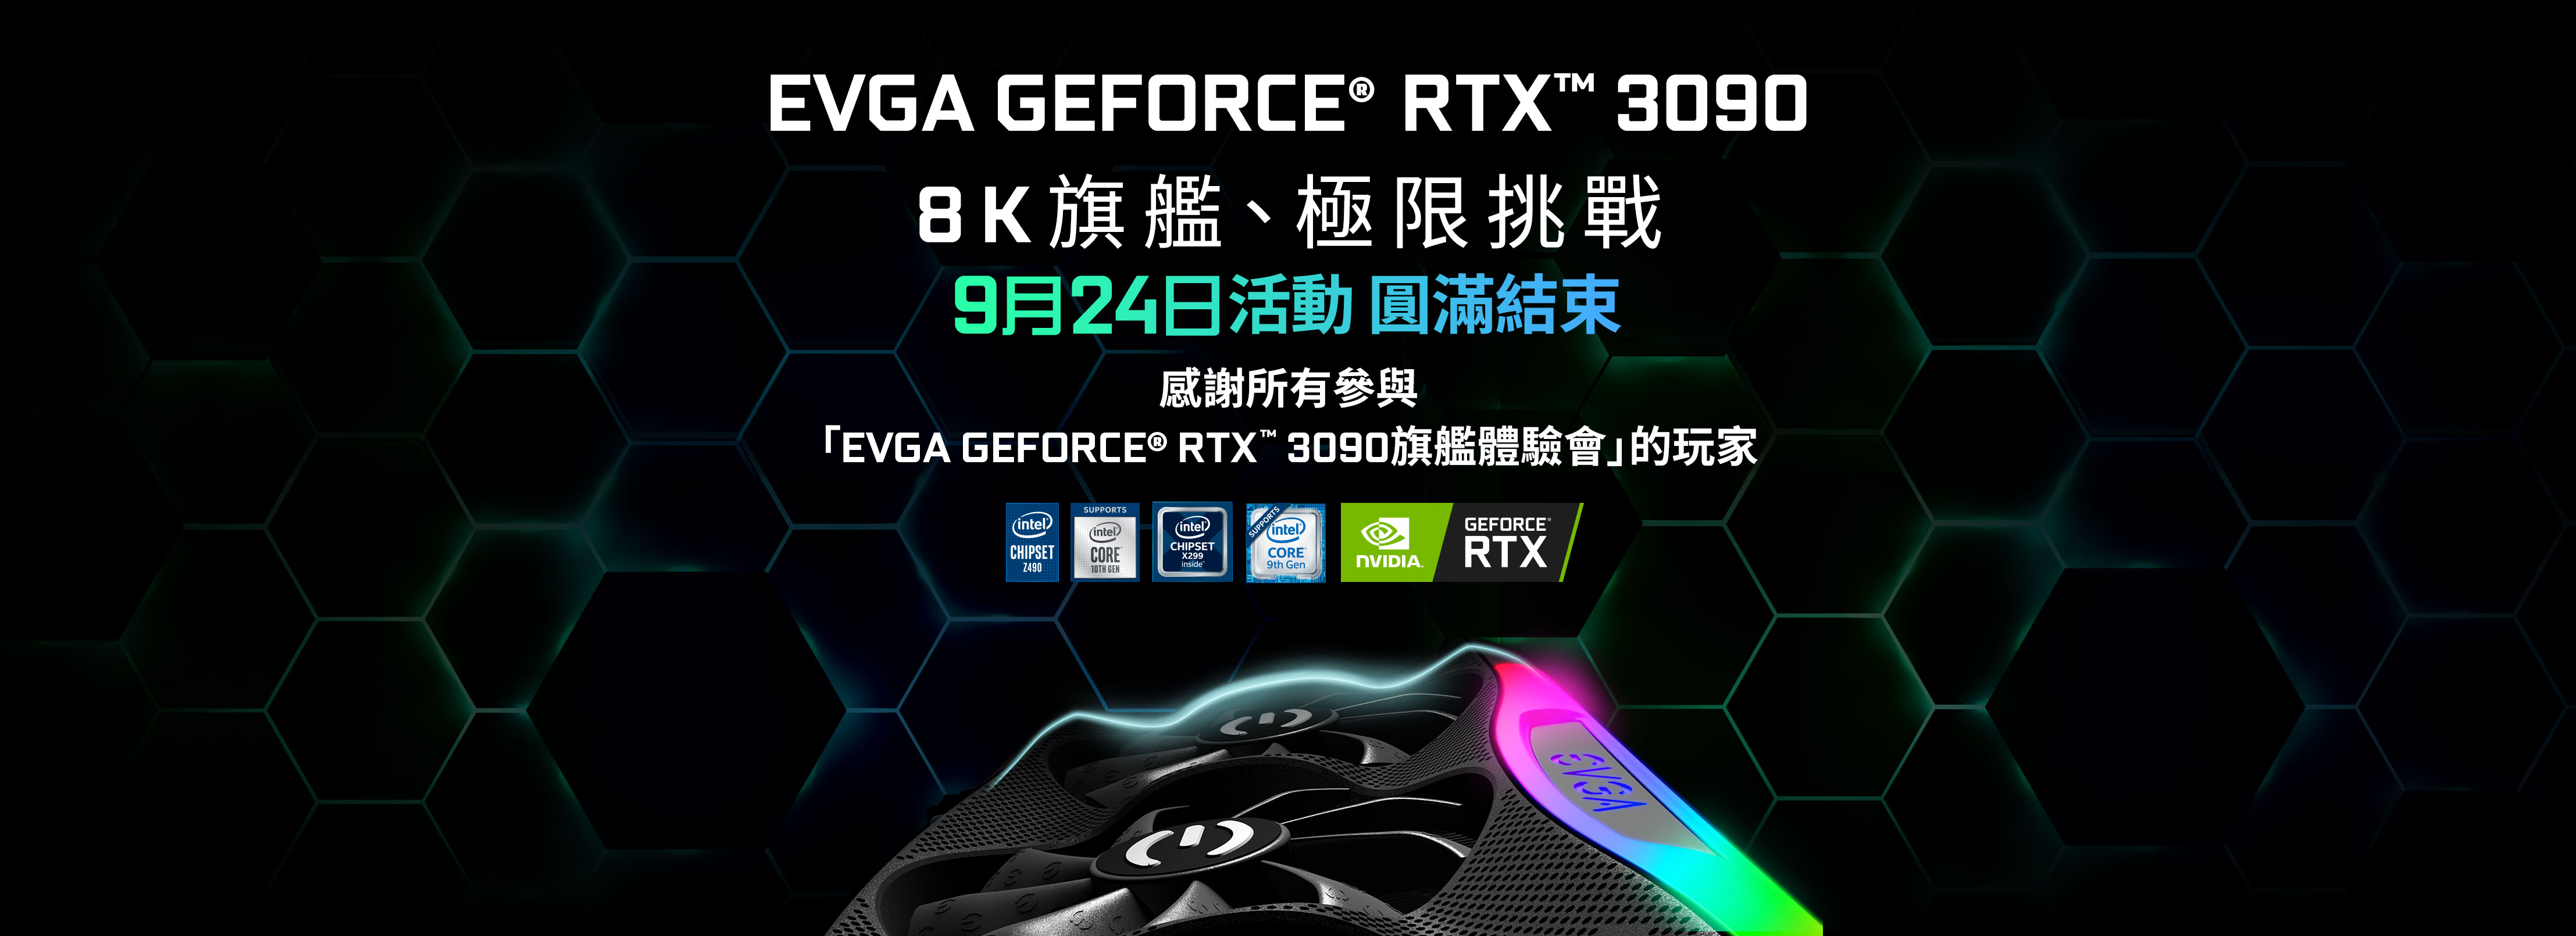 EVGA GeForce RTX 3090 8K旗艦、極限挑戰